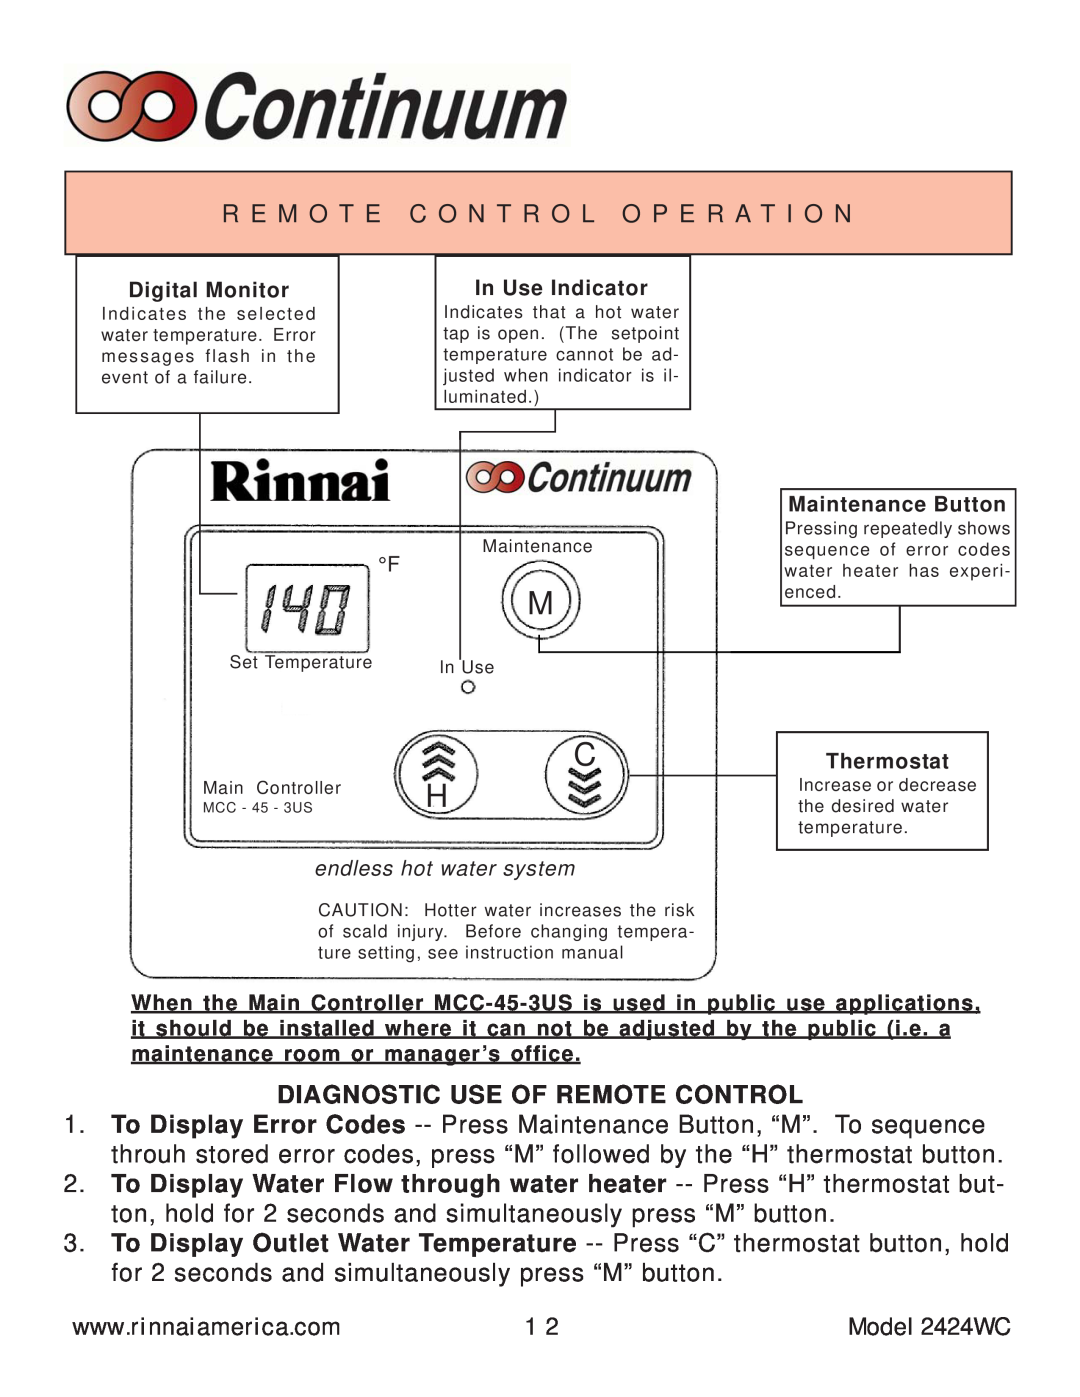 Rinnai 2424WC manual Diagnostic Use Of Remote Control 